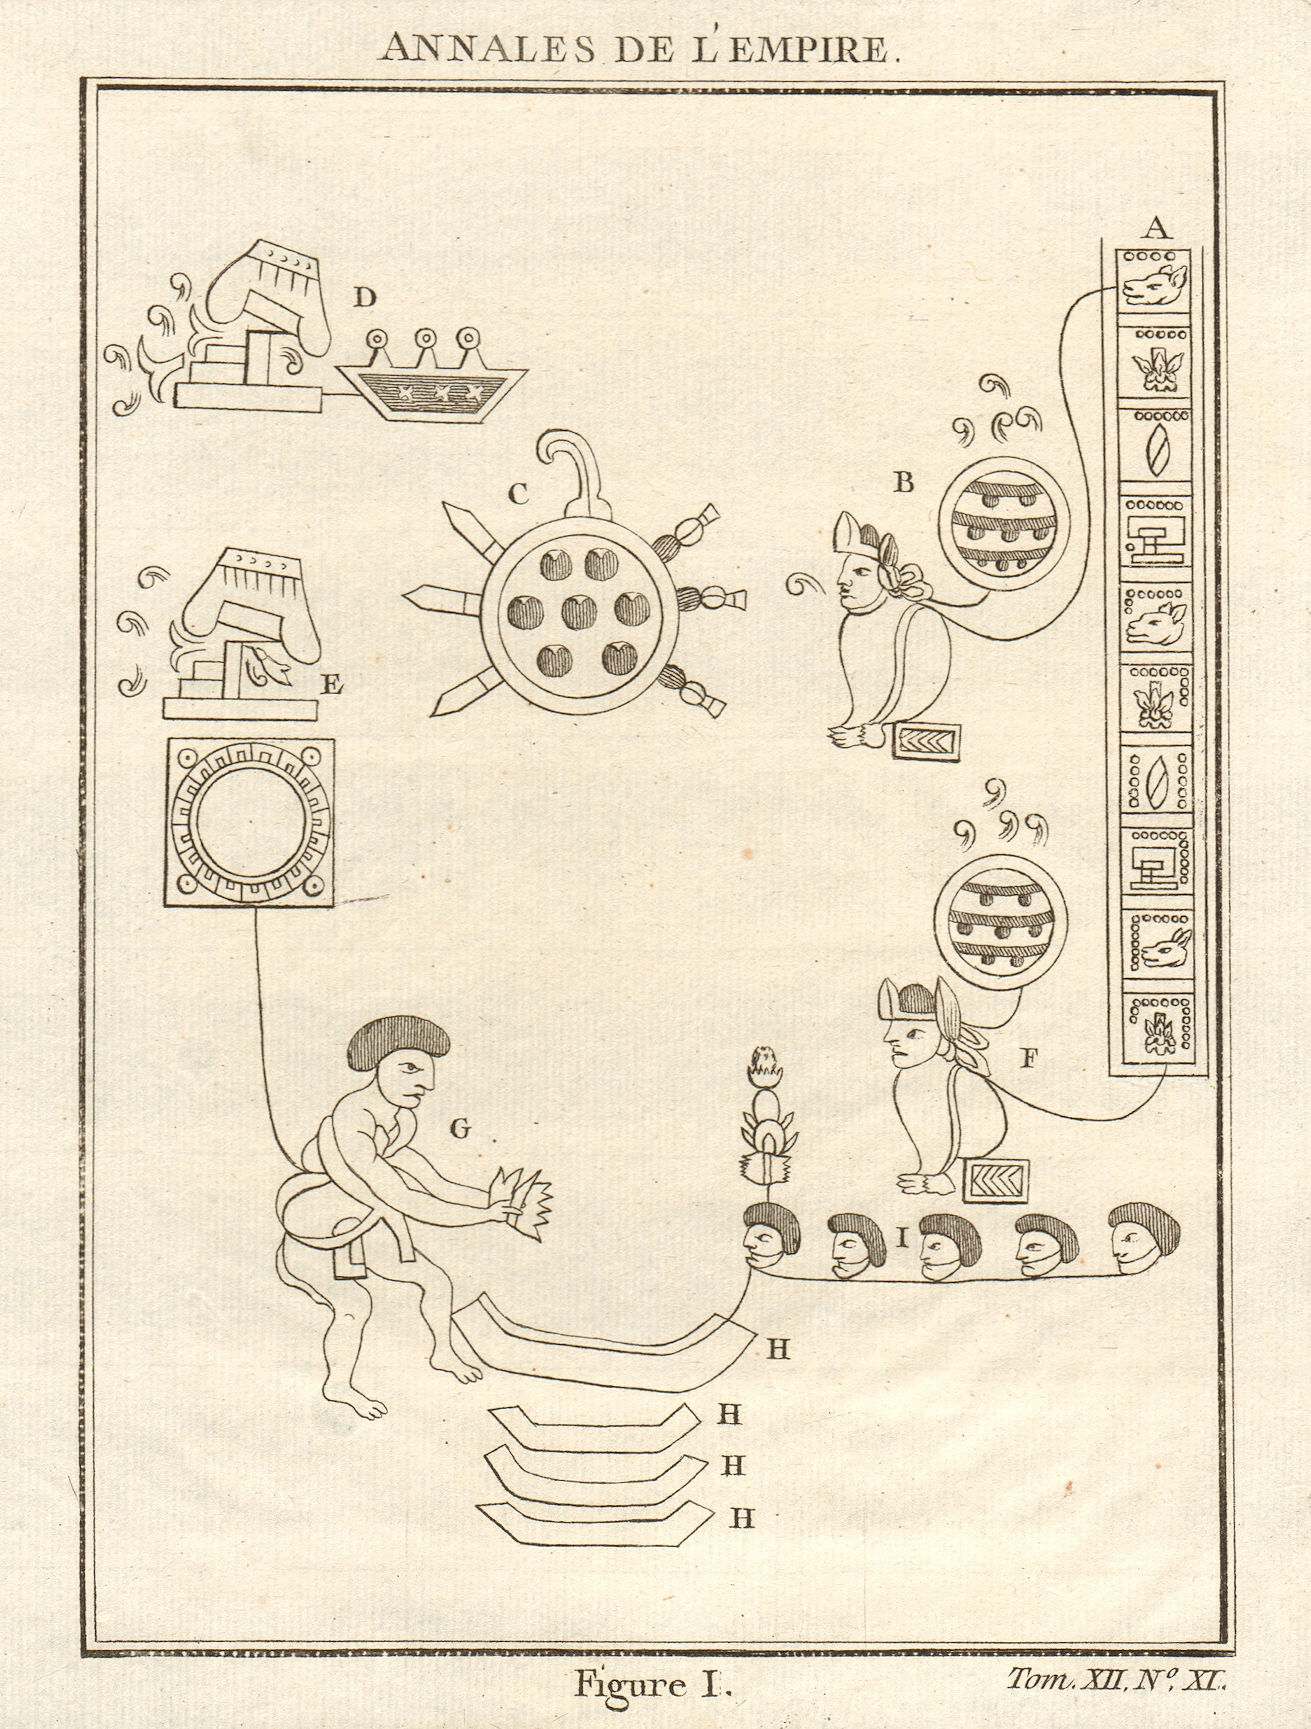 Annals of the Aztec Empire. Aztec/Nahuatl glyphs. Mexico. Chimalpupuca 1754